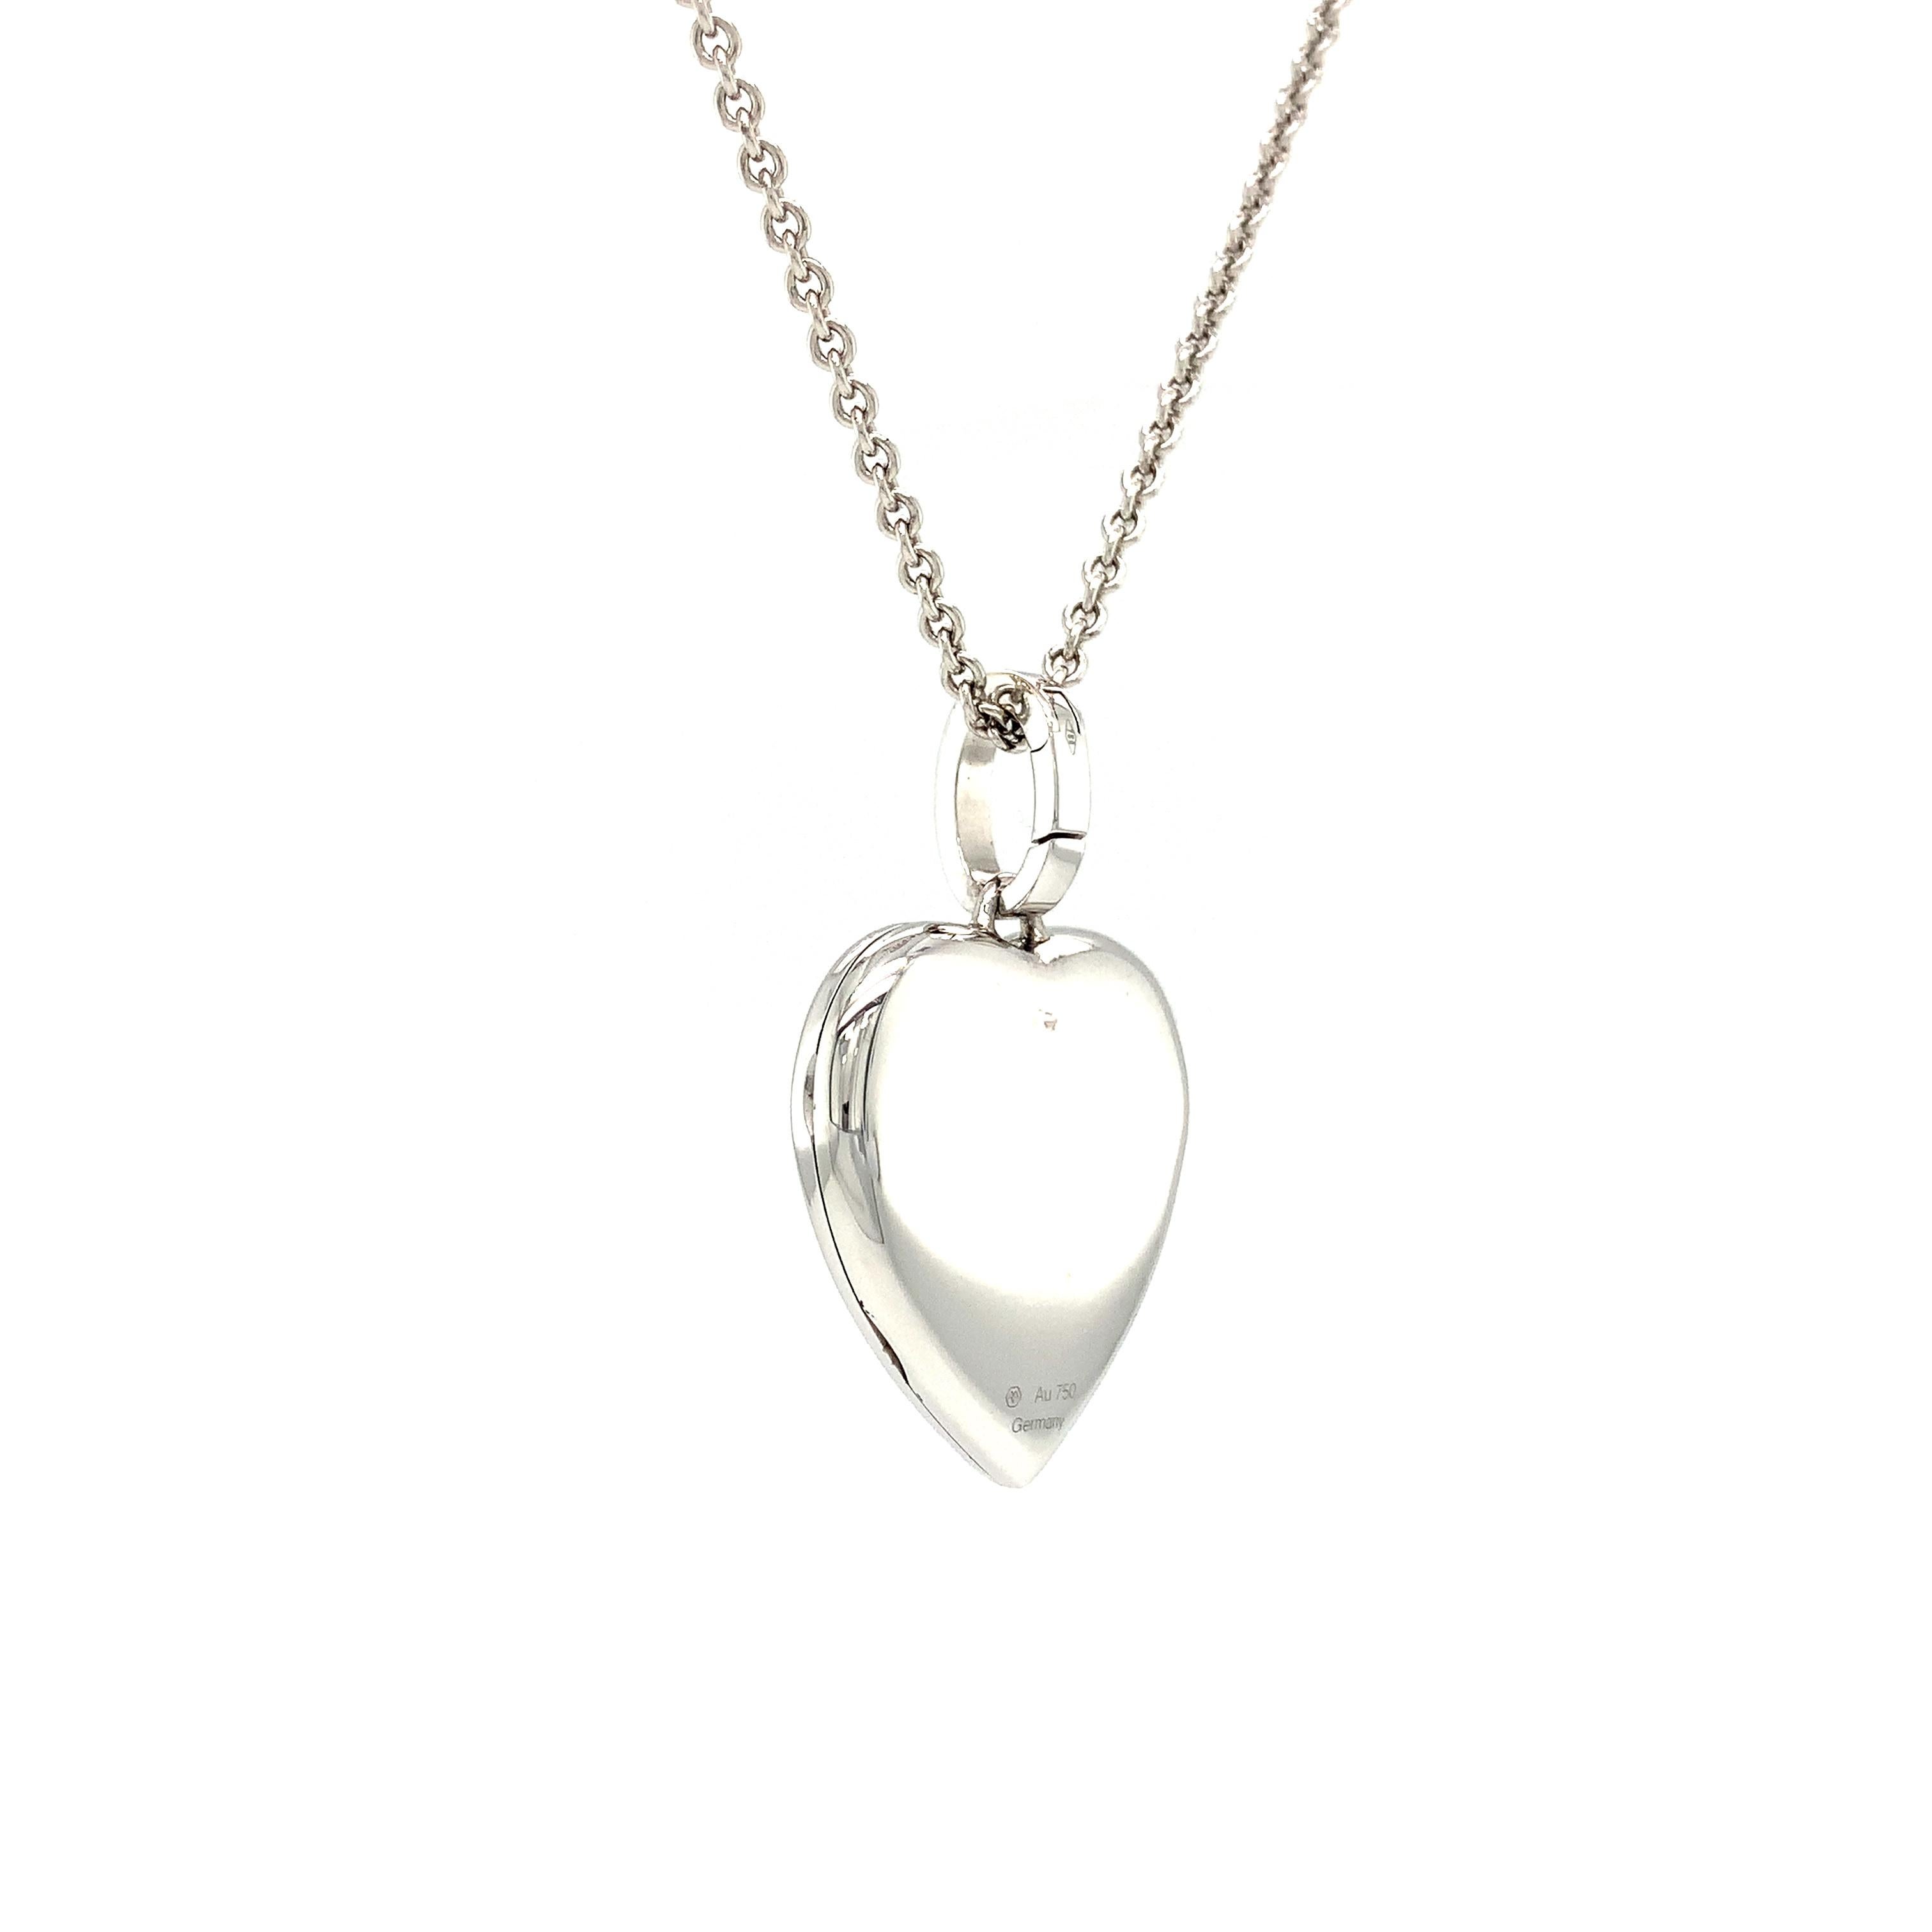 Belle Époque Heart Shaped Locket Pendant Necklace - 18k Polished White Gold - 23.0 x 25.0 mm For Sale